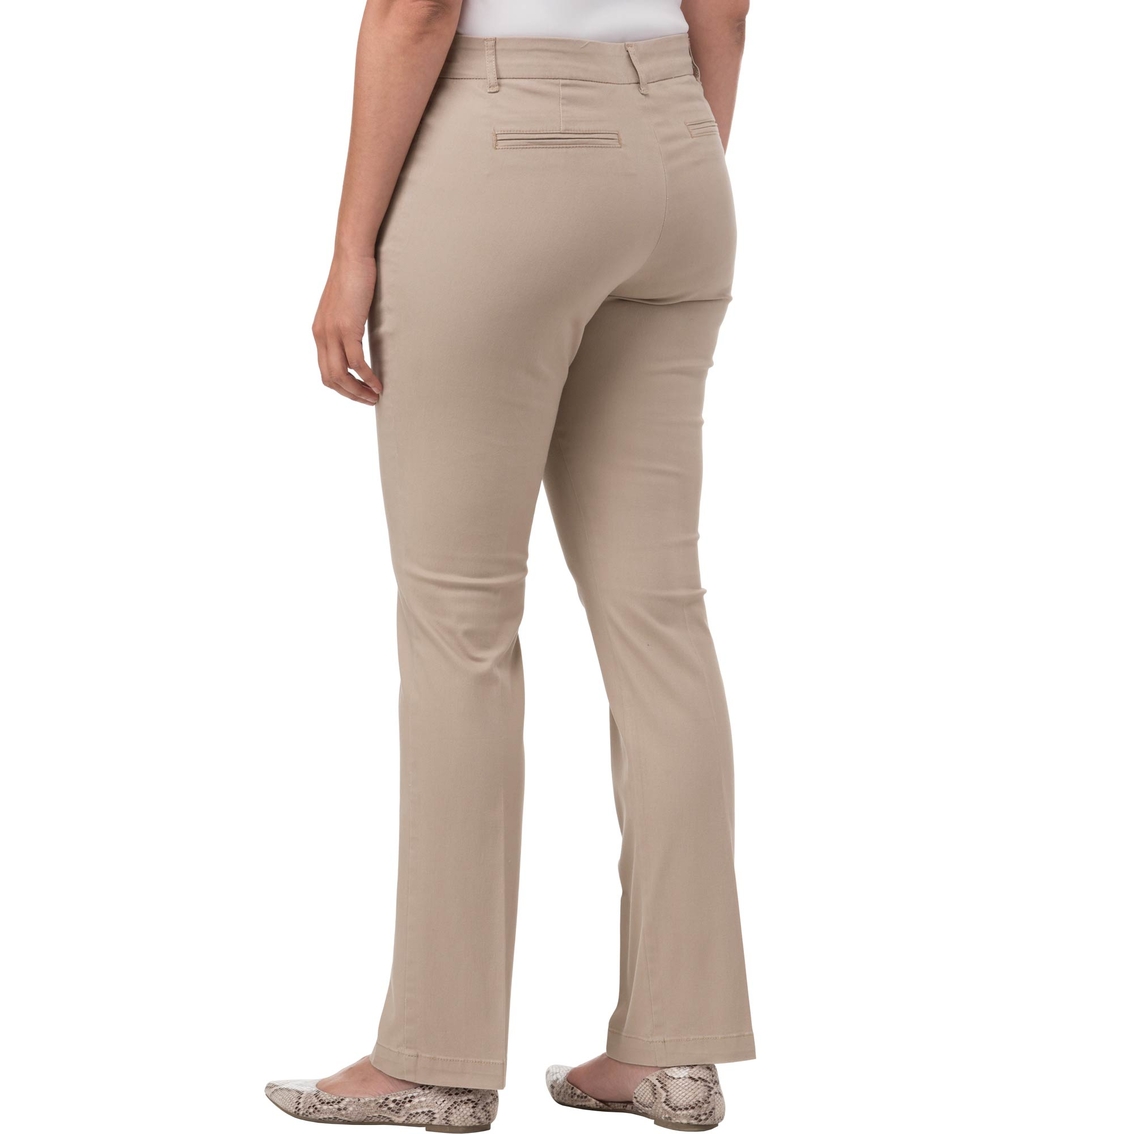 Gloria Vanderbilt Charlene No Gap Twill Pants | Pants | Clothing ...